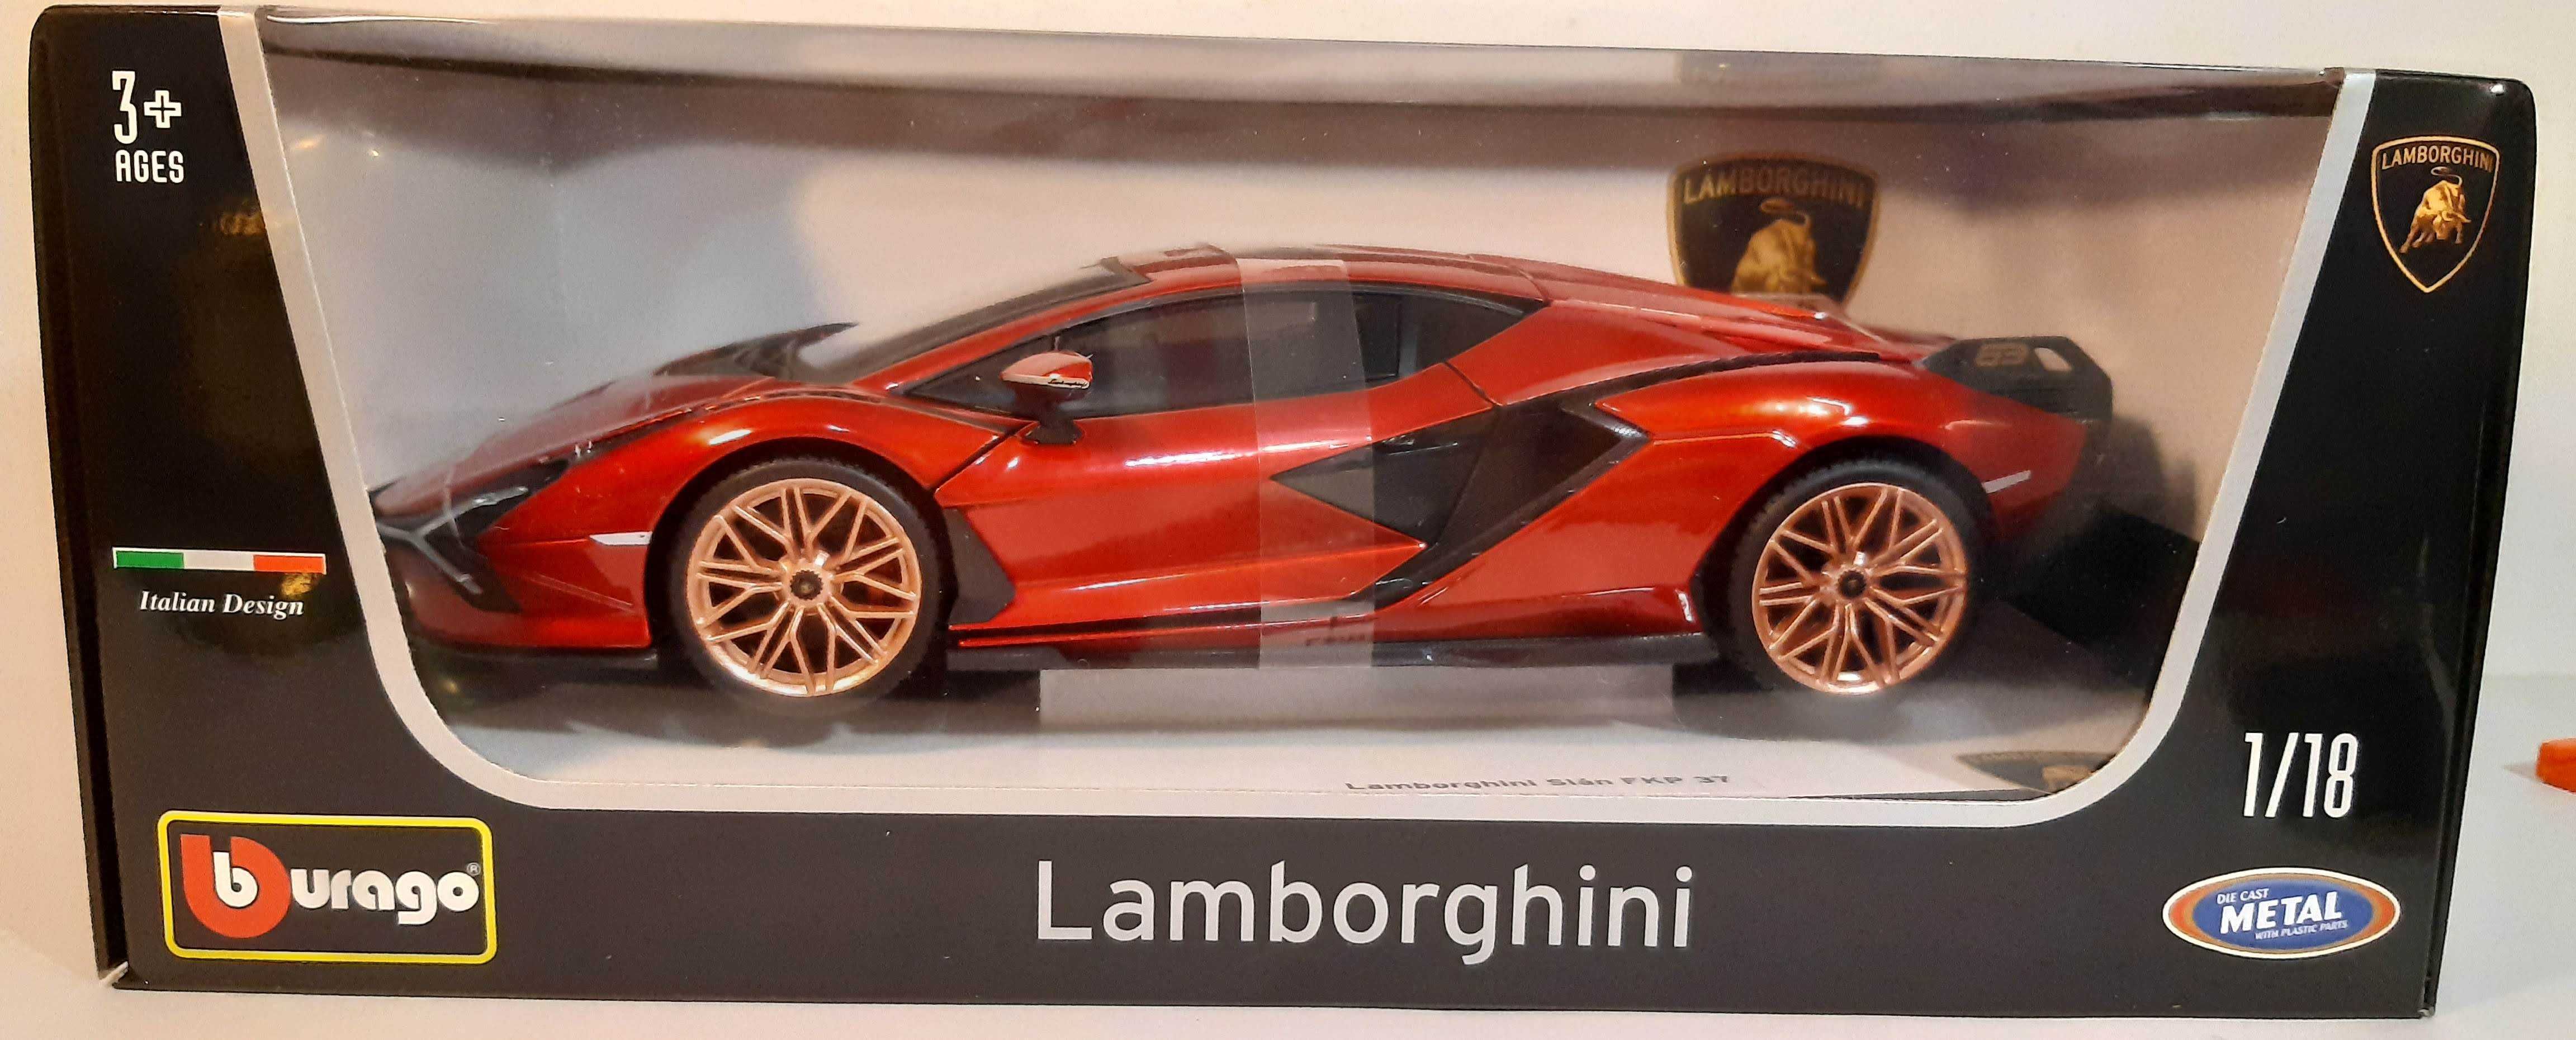 1/18 Lamborghini Sian vm - Bbuargo